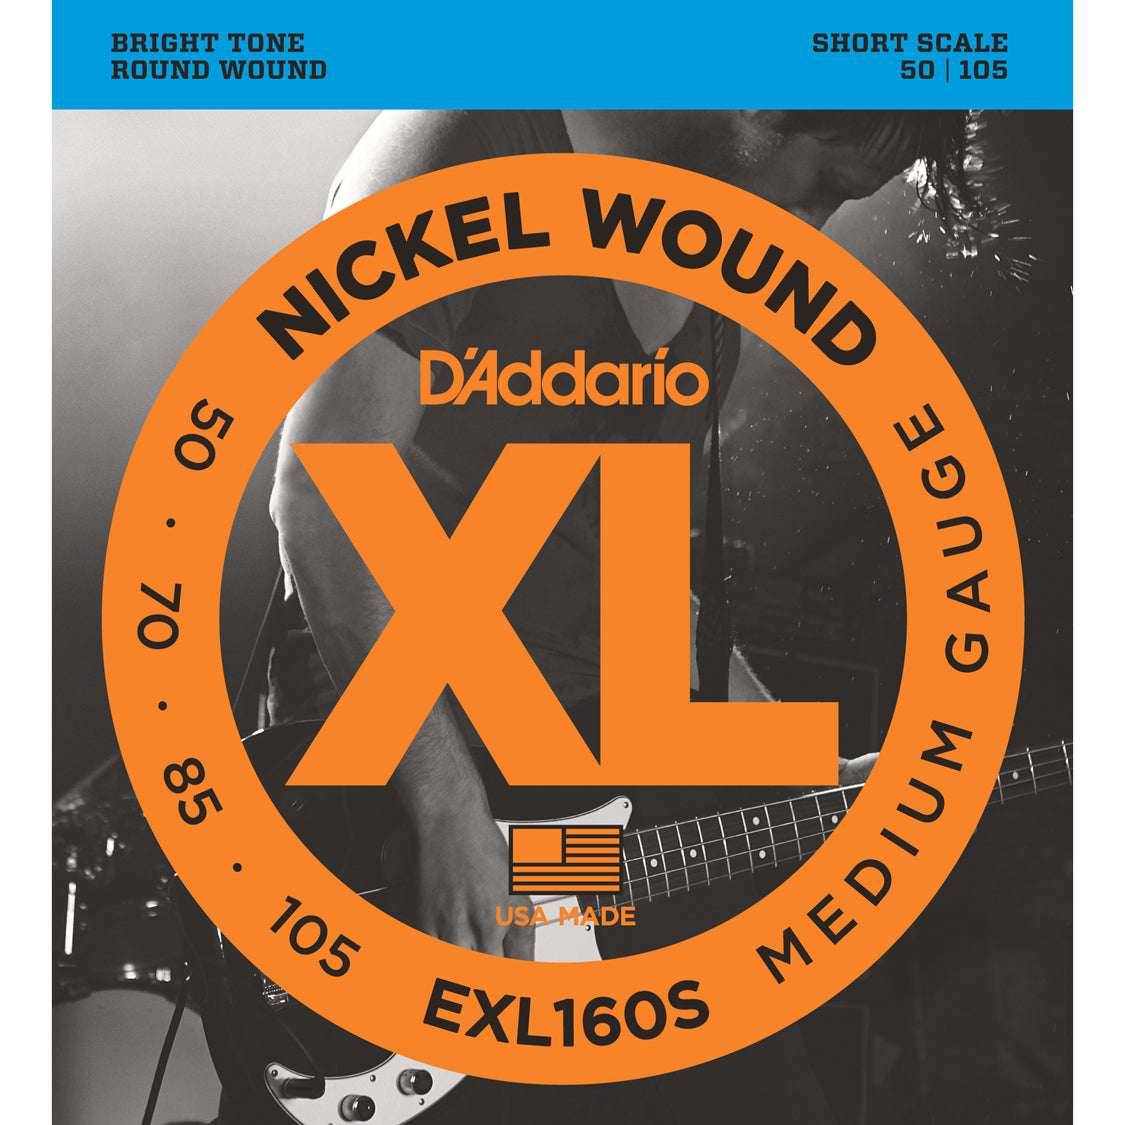 D'Addario EXL160S Nickel Wound Bass Medium 50-105 Short Scale